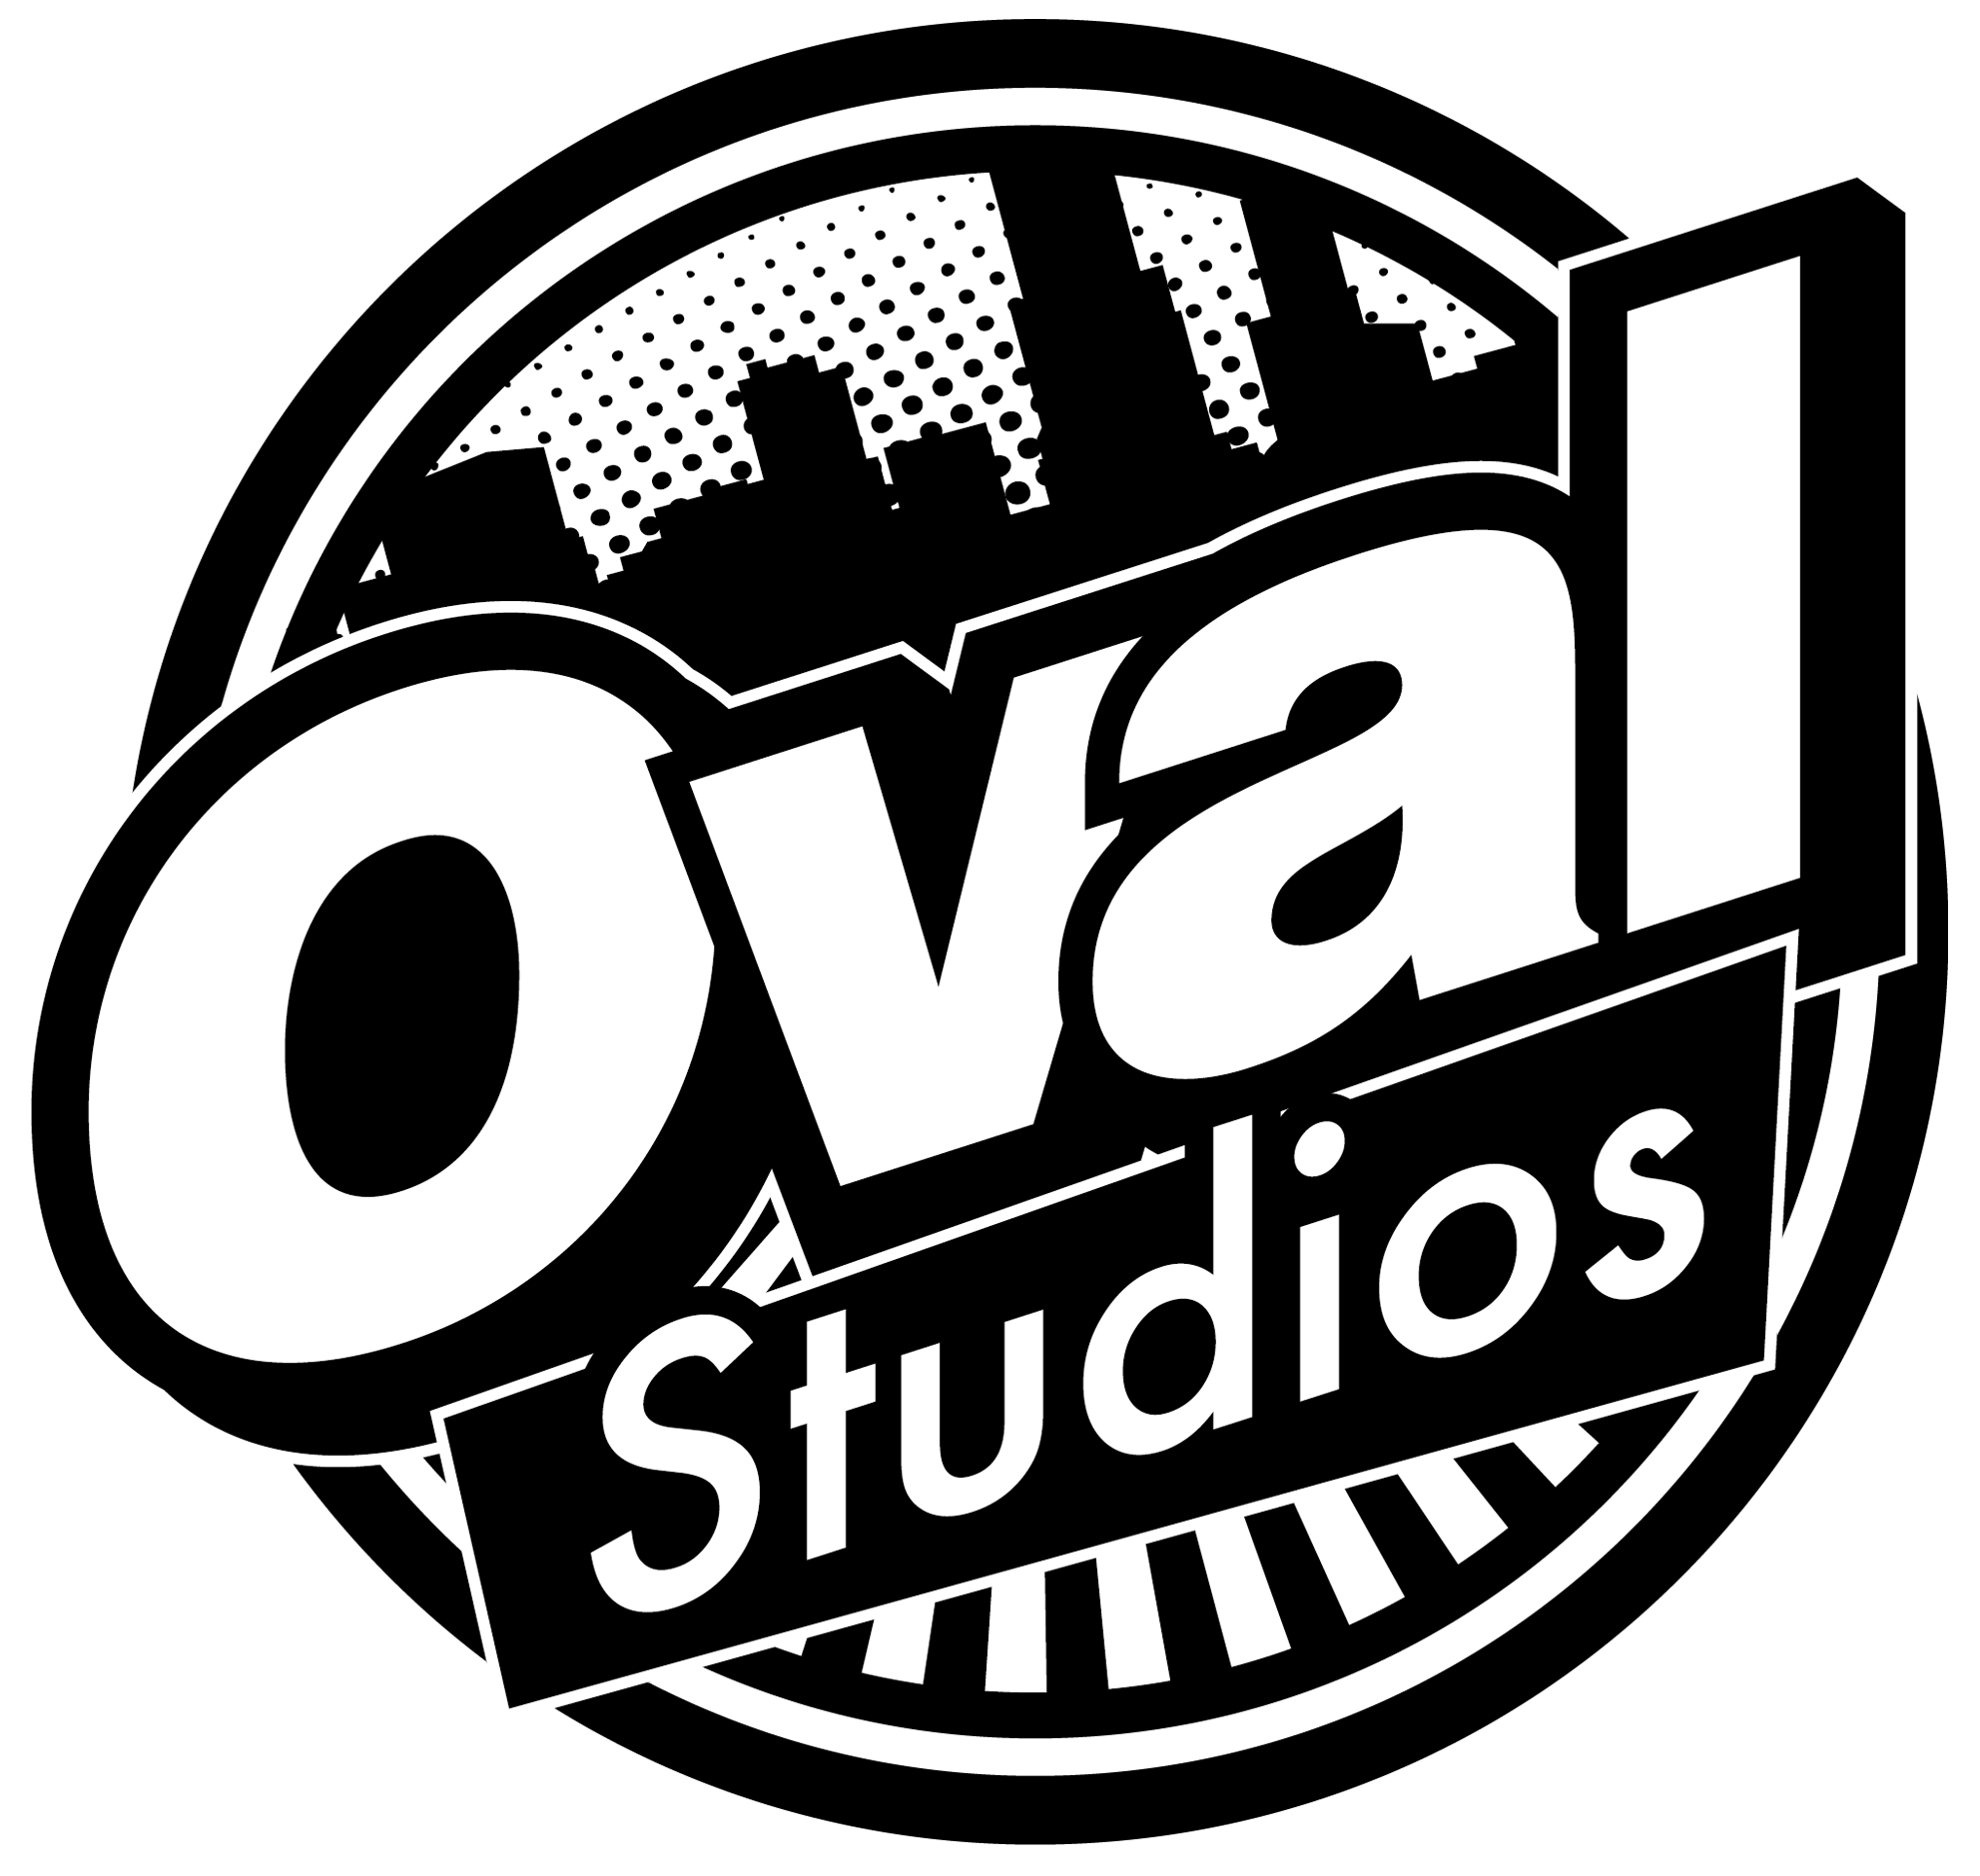 Oval Studios